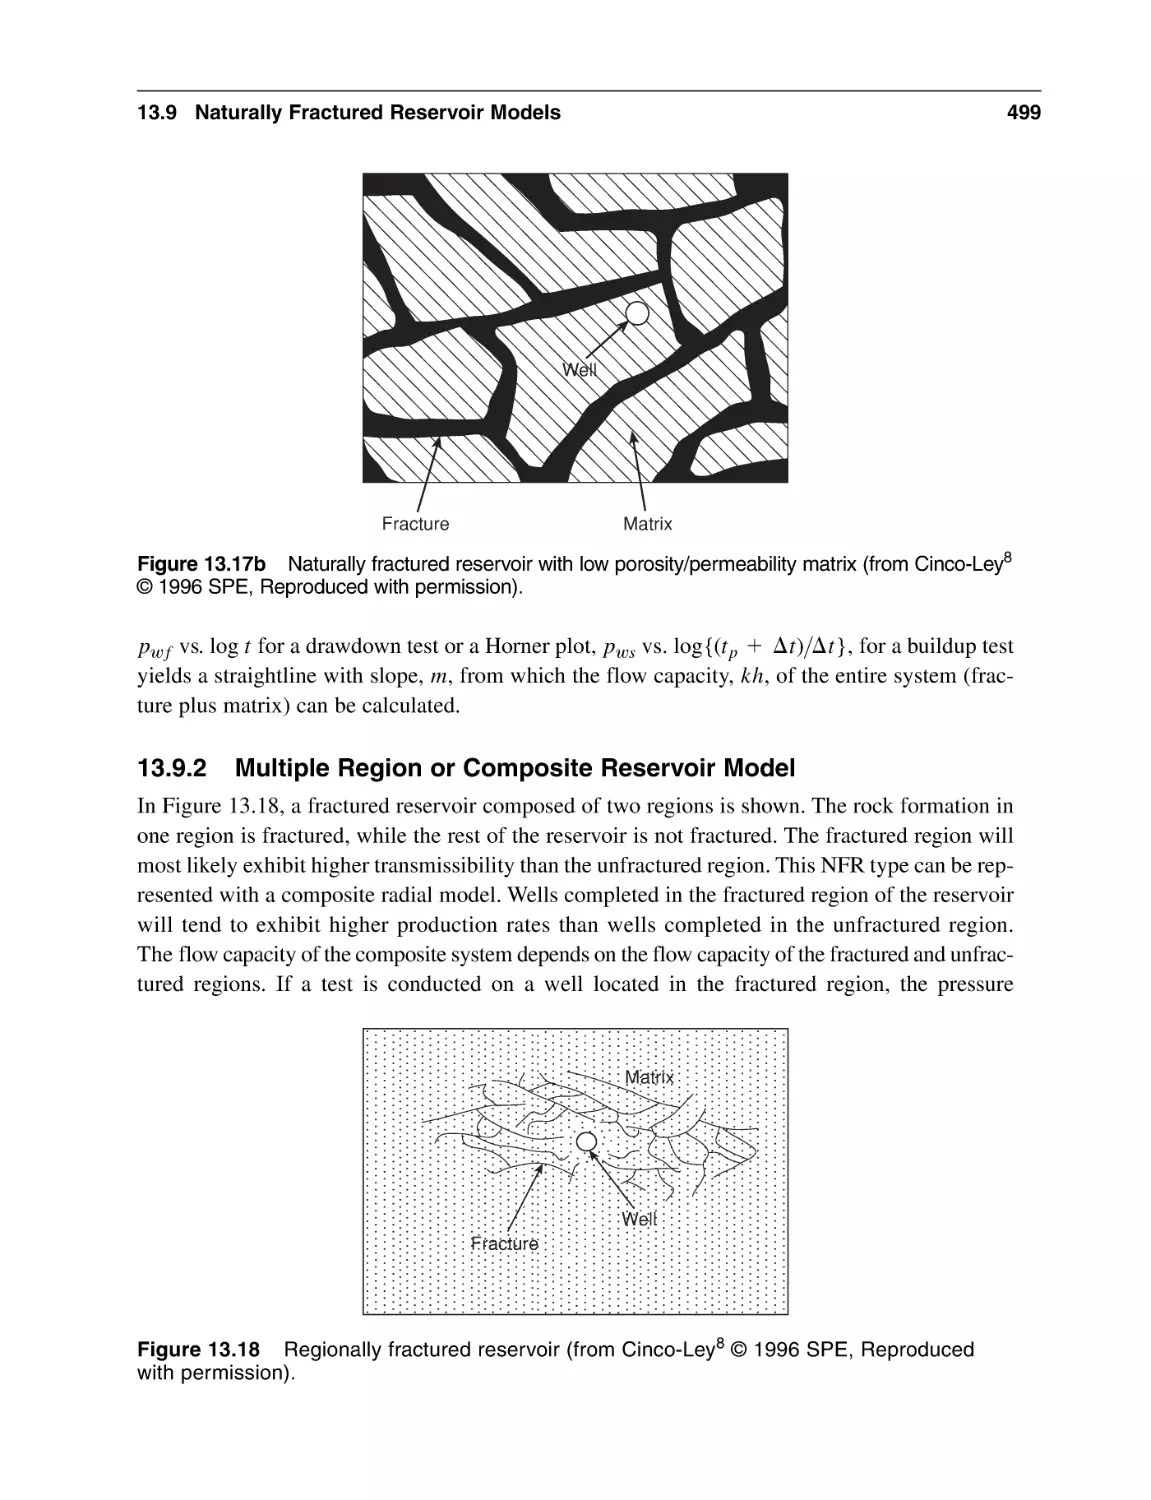 13.9.2 Multiple Region or Composite Reservoir Model